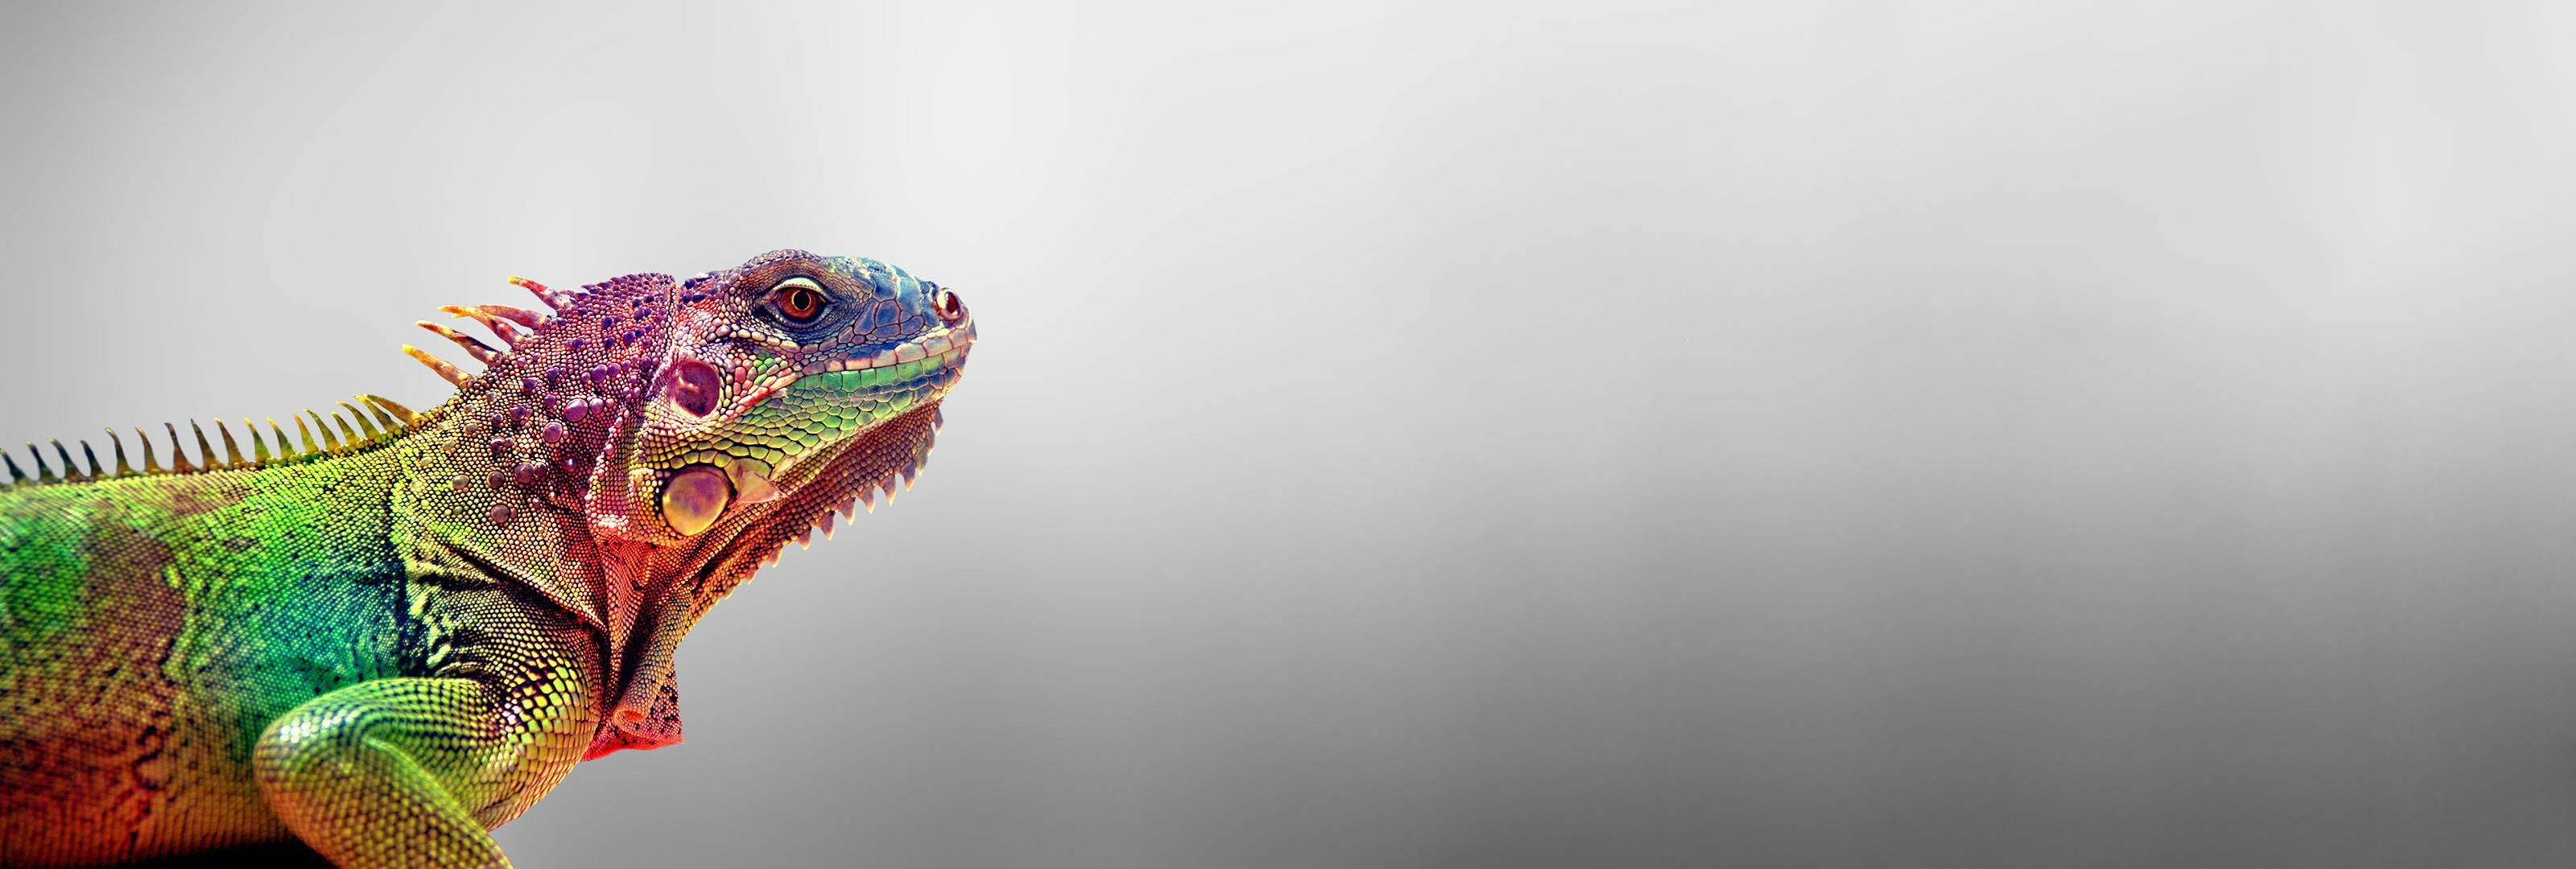 Lizard HD Wallpaper Background Image